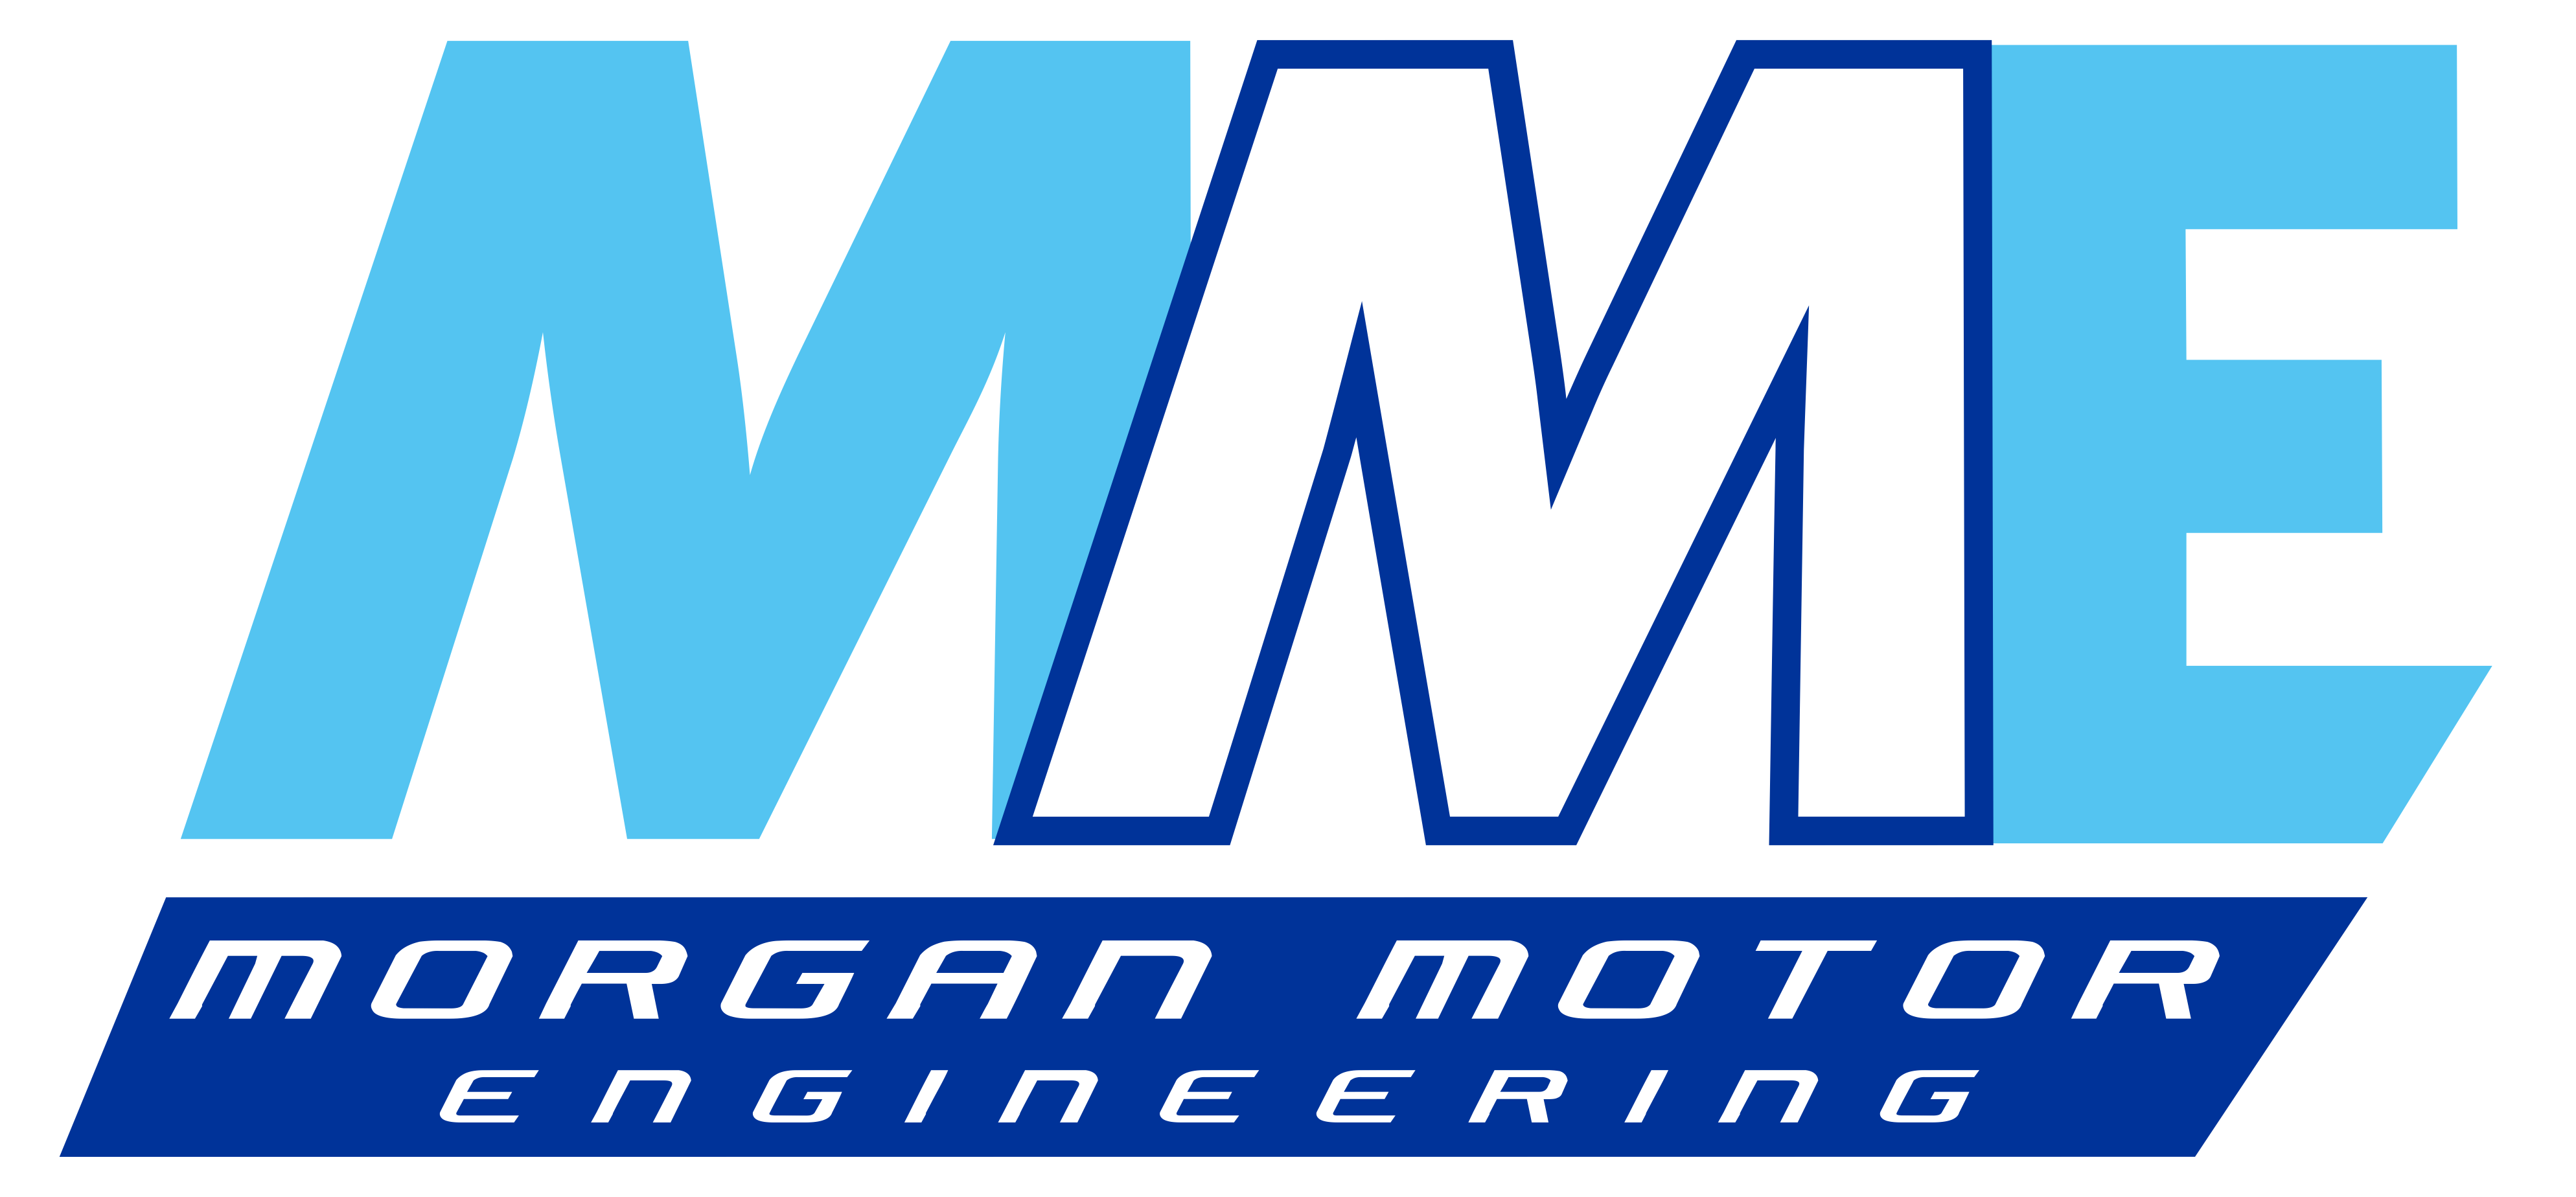 Morgan Motor Engineering